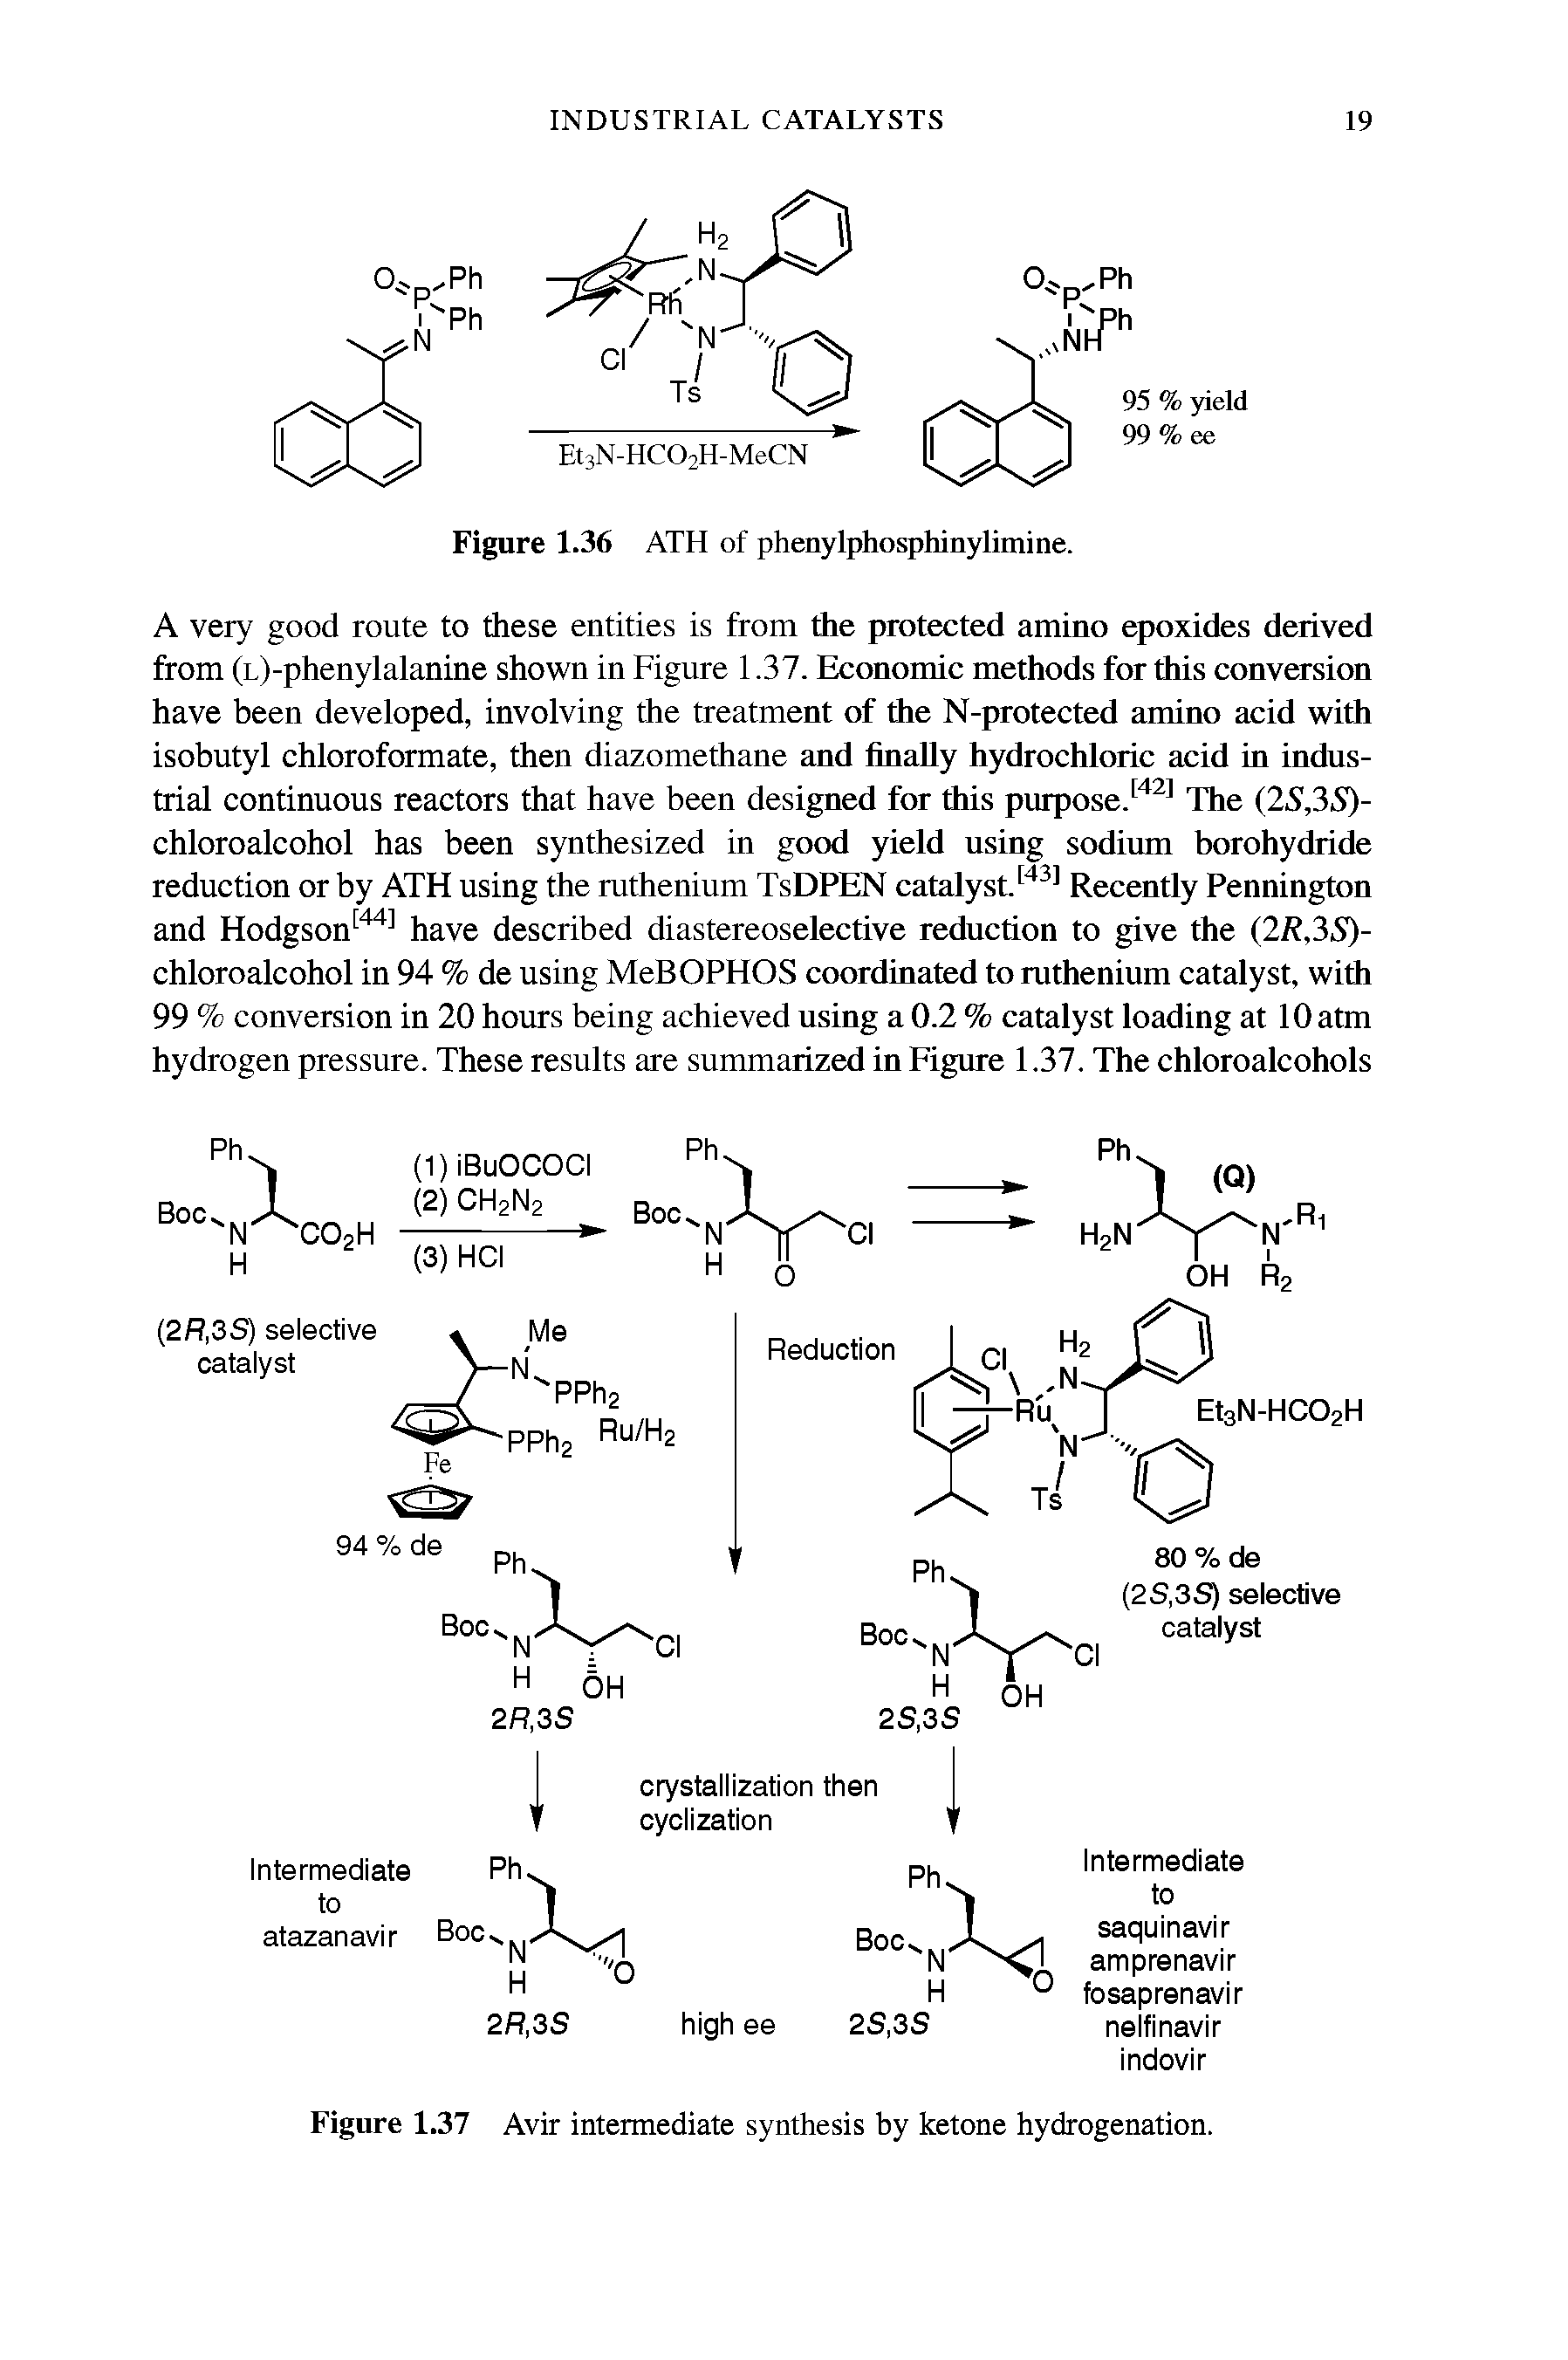 Figure 1.37 Avir intermediate synthesis by ketone hydrogenation.